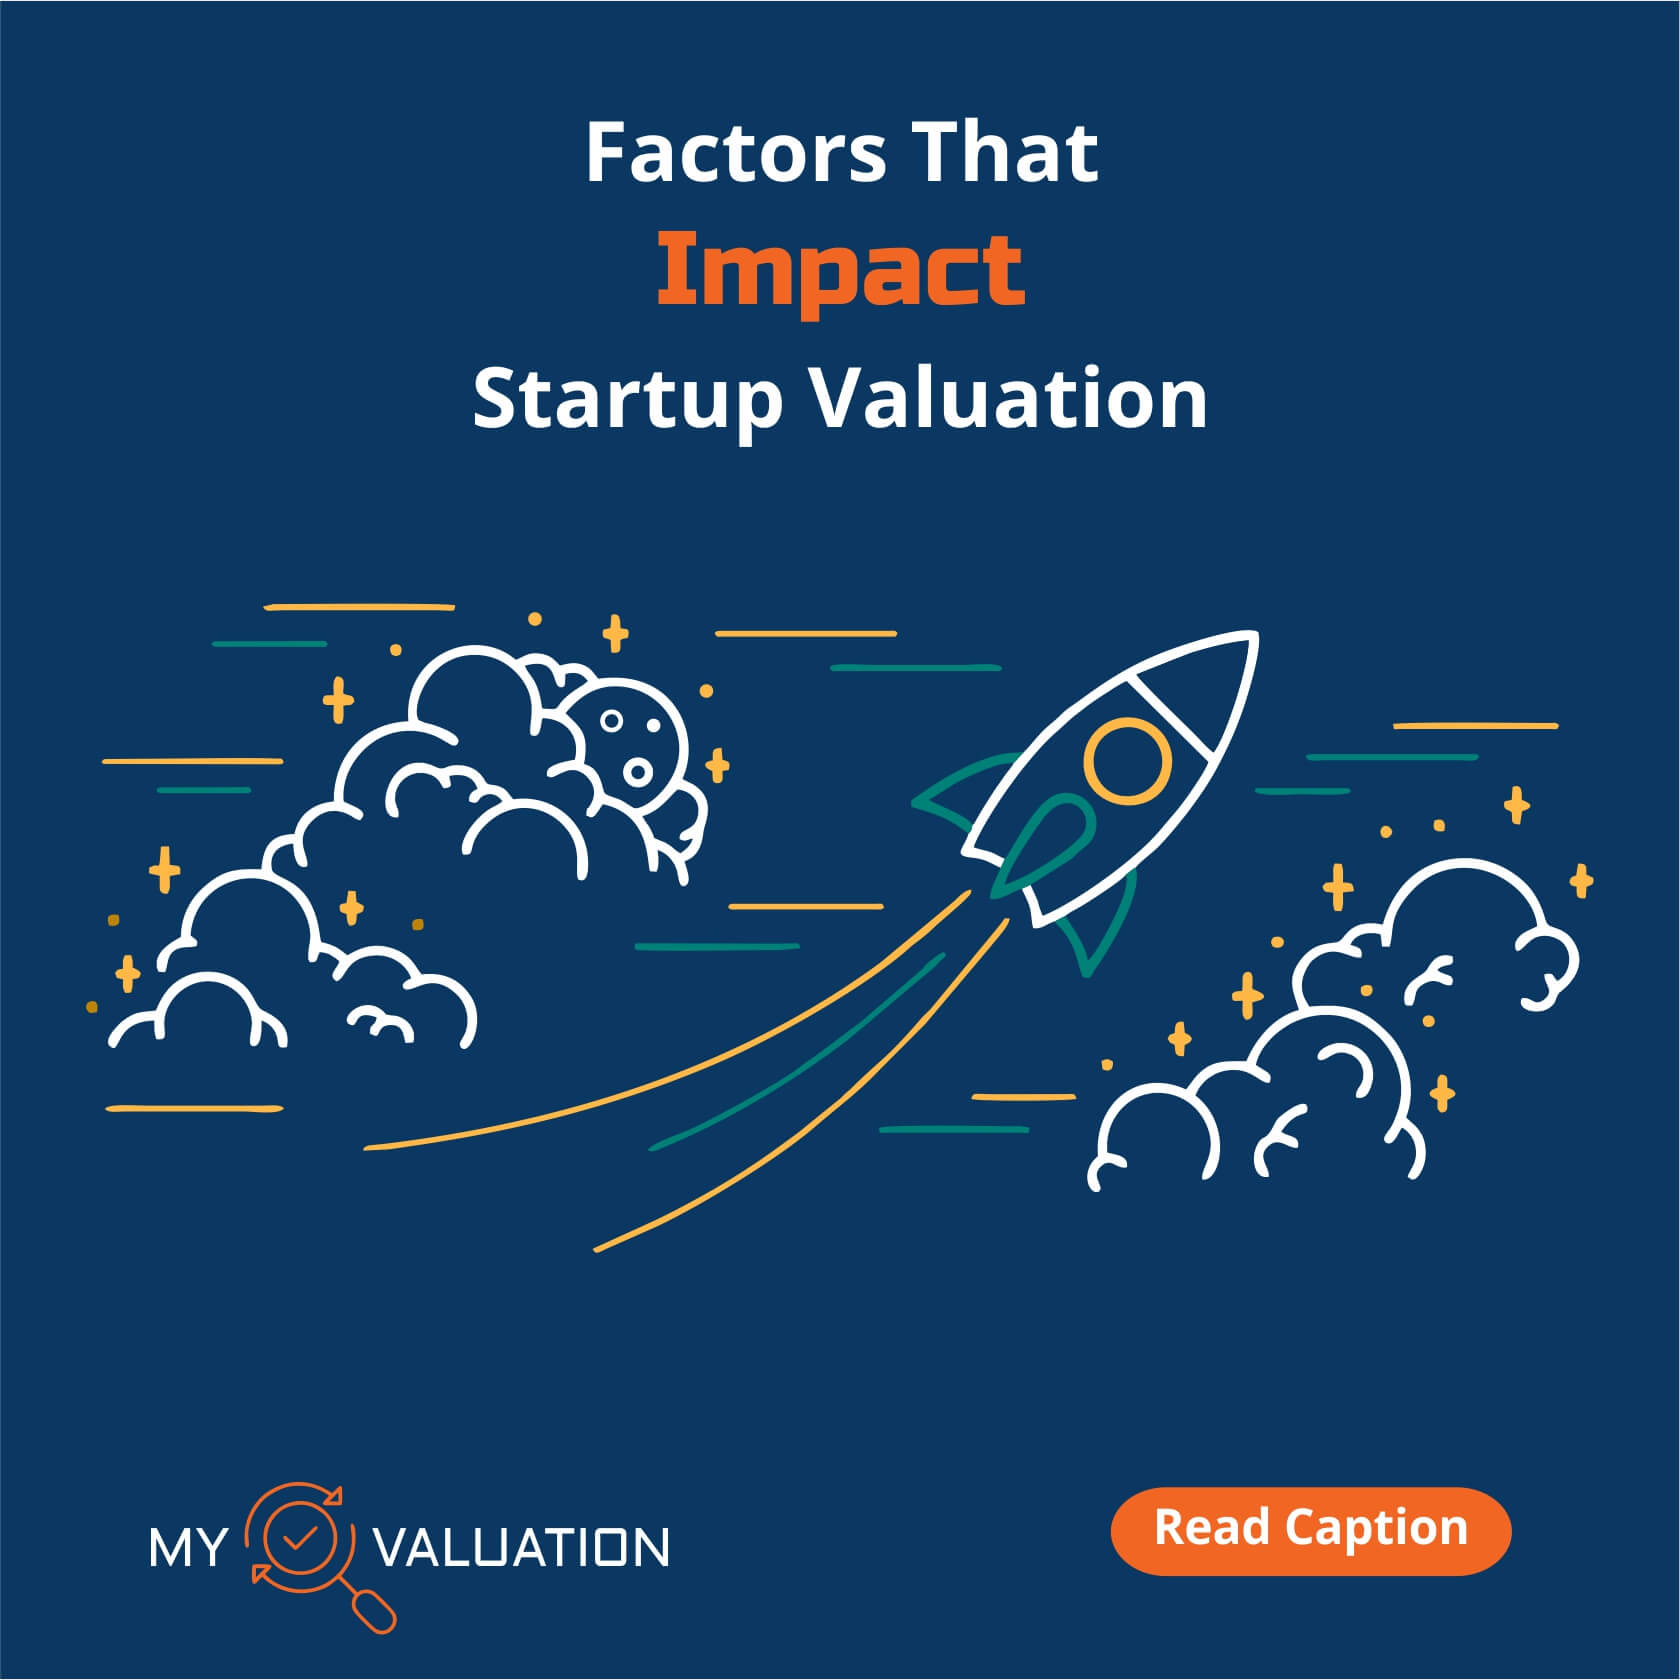 Factors that impact startup valuation